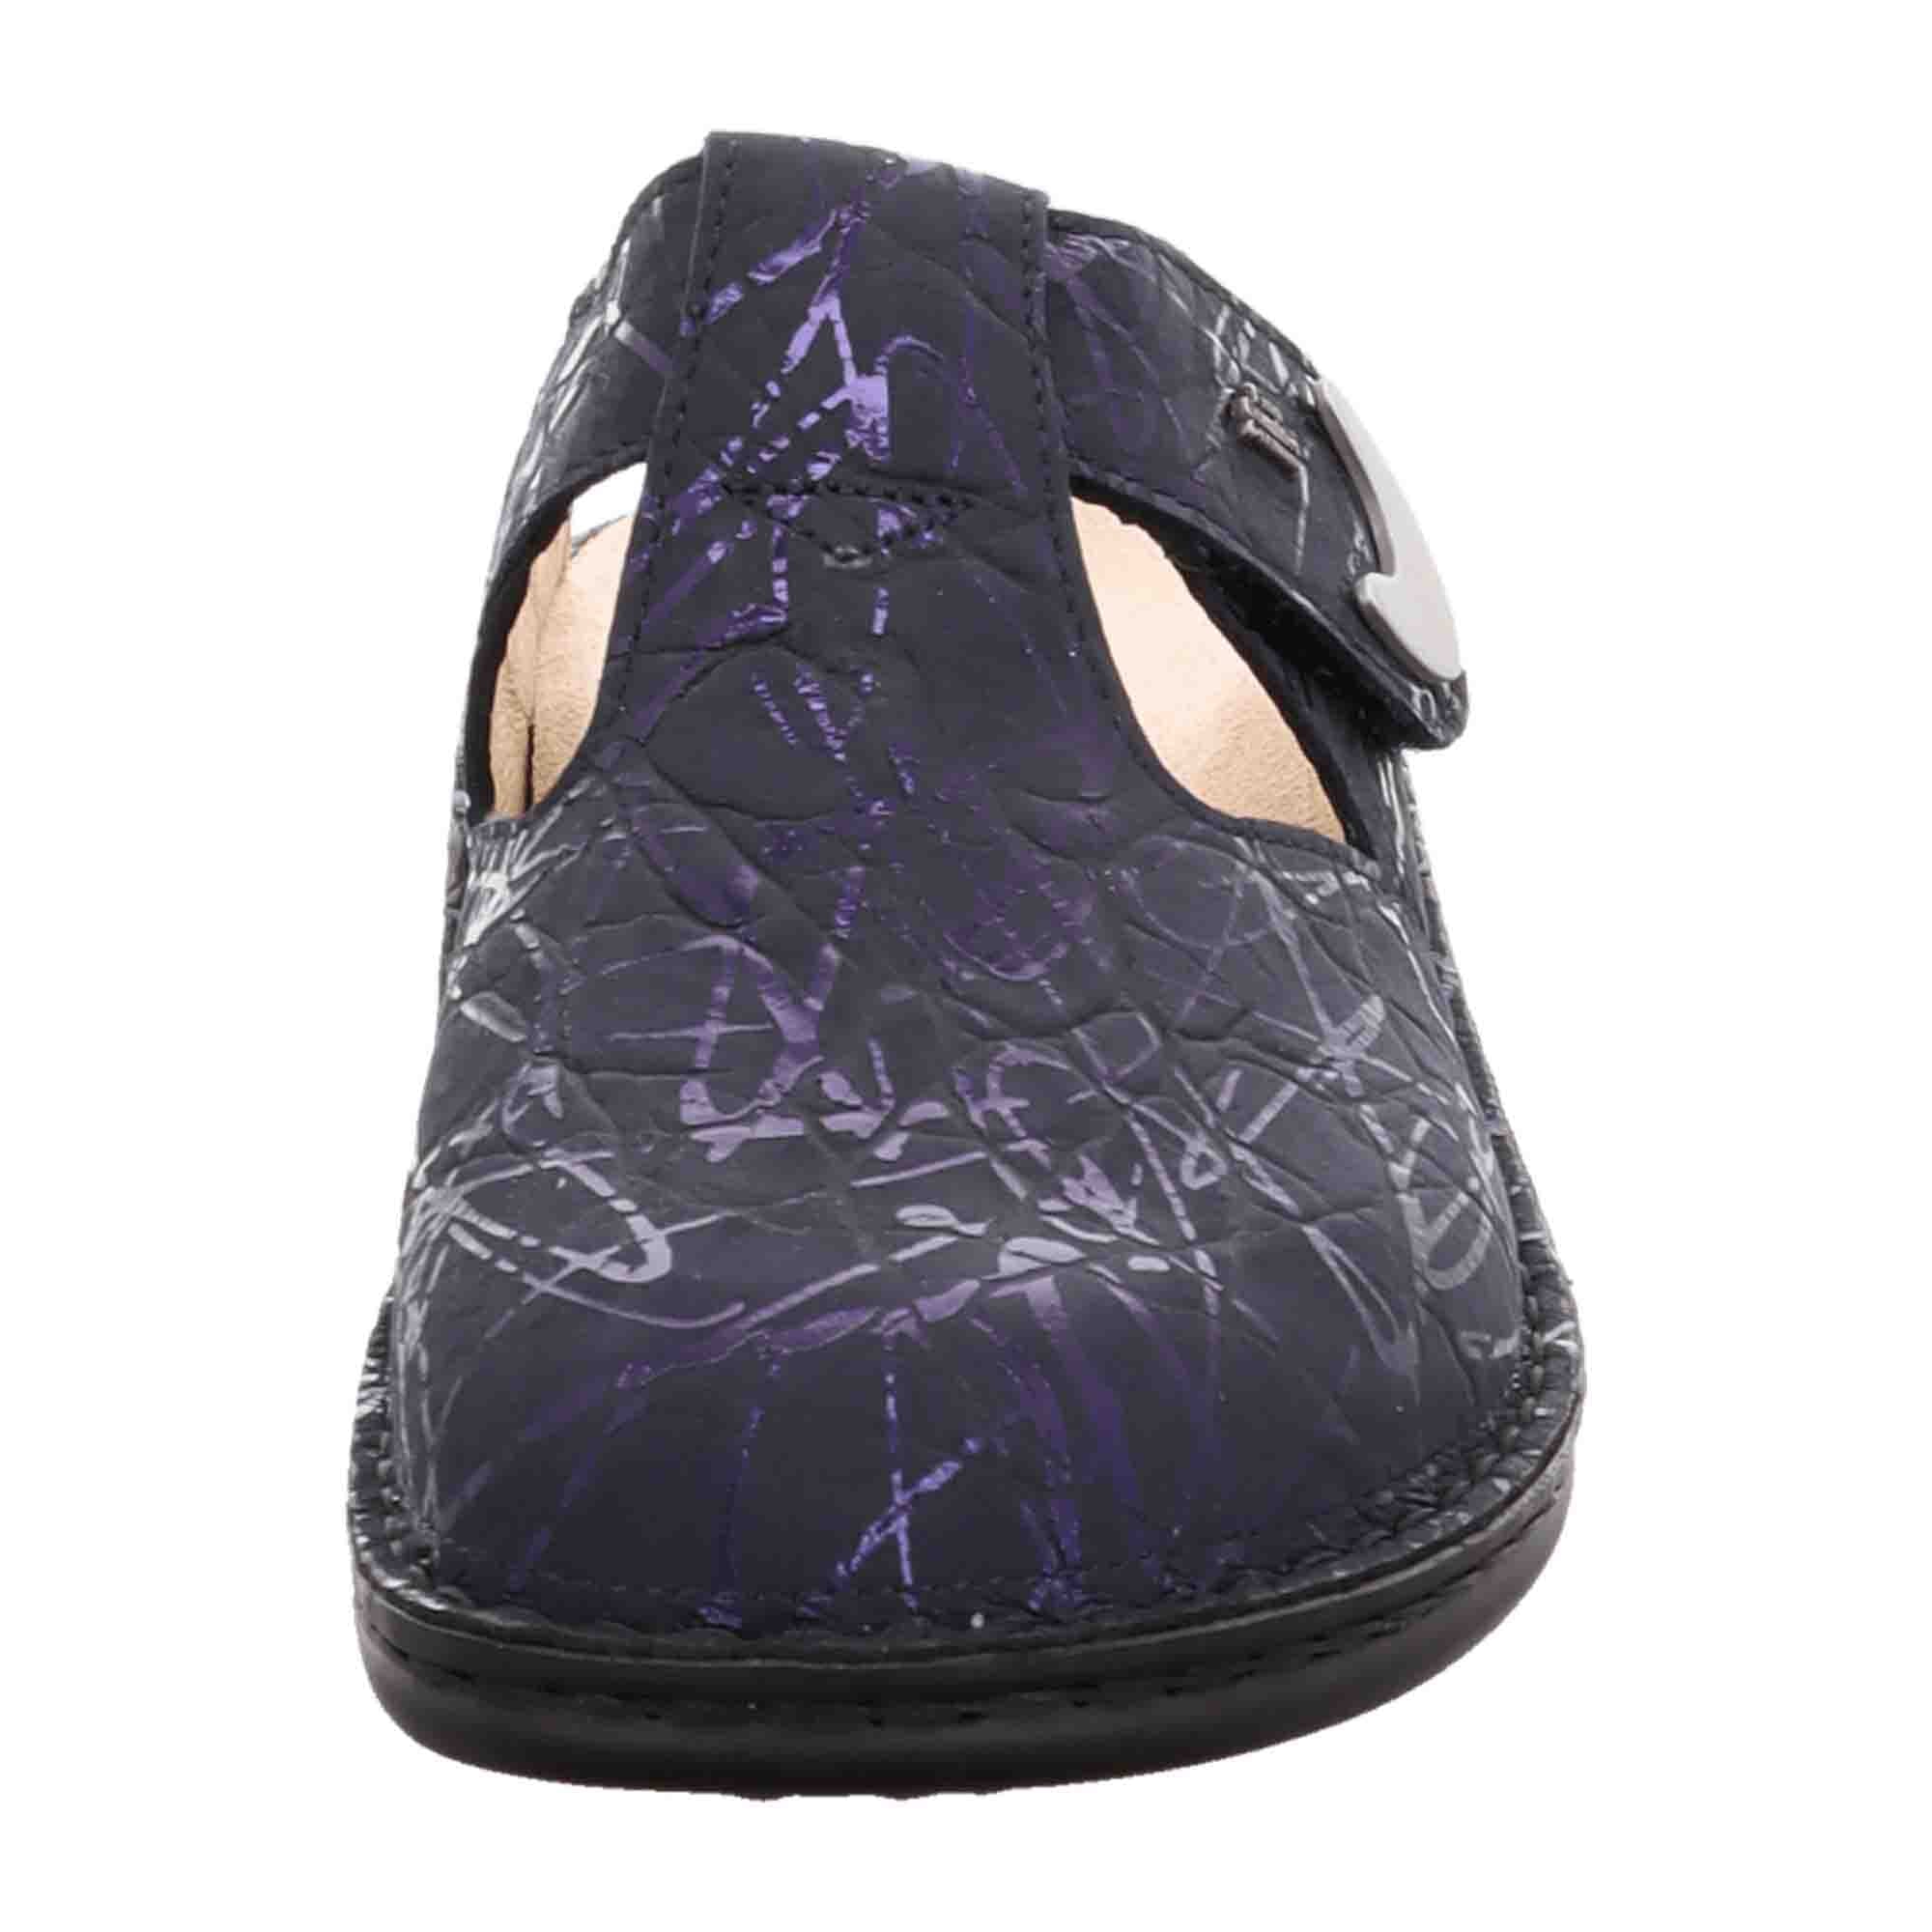 Finn Comfort Belem Women's Comfortable Shoes, Stylish Blue Leather - 2555-755046